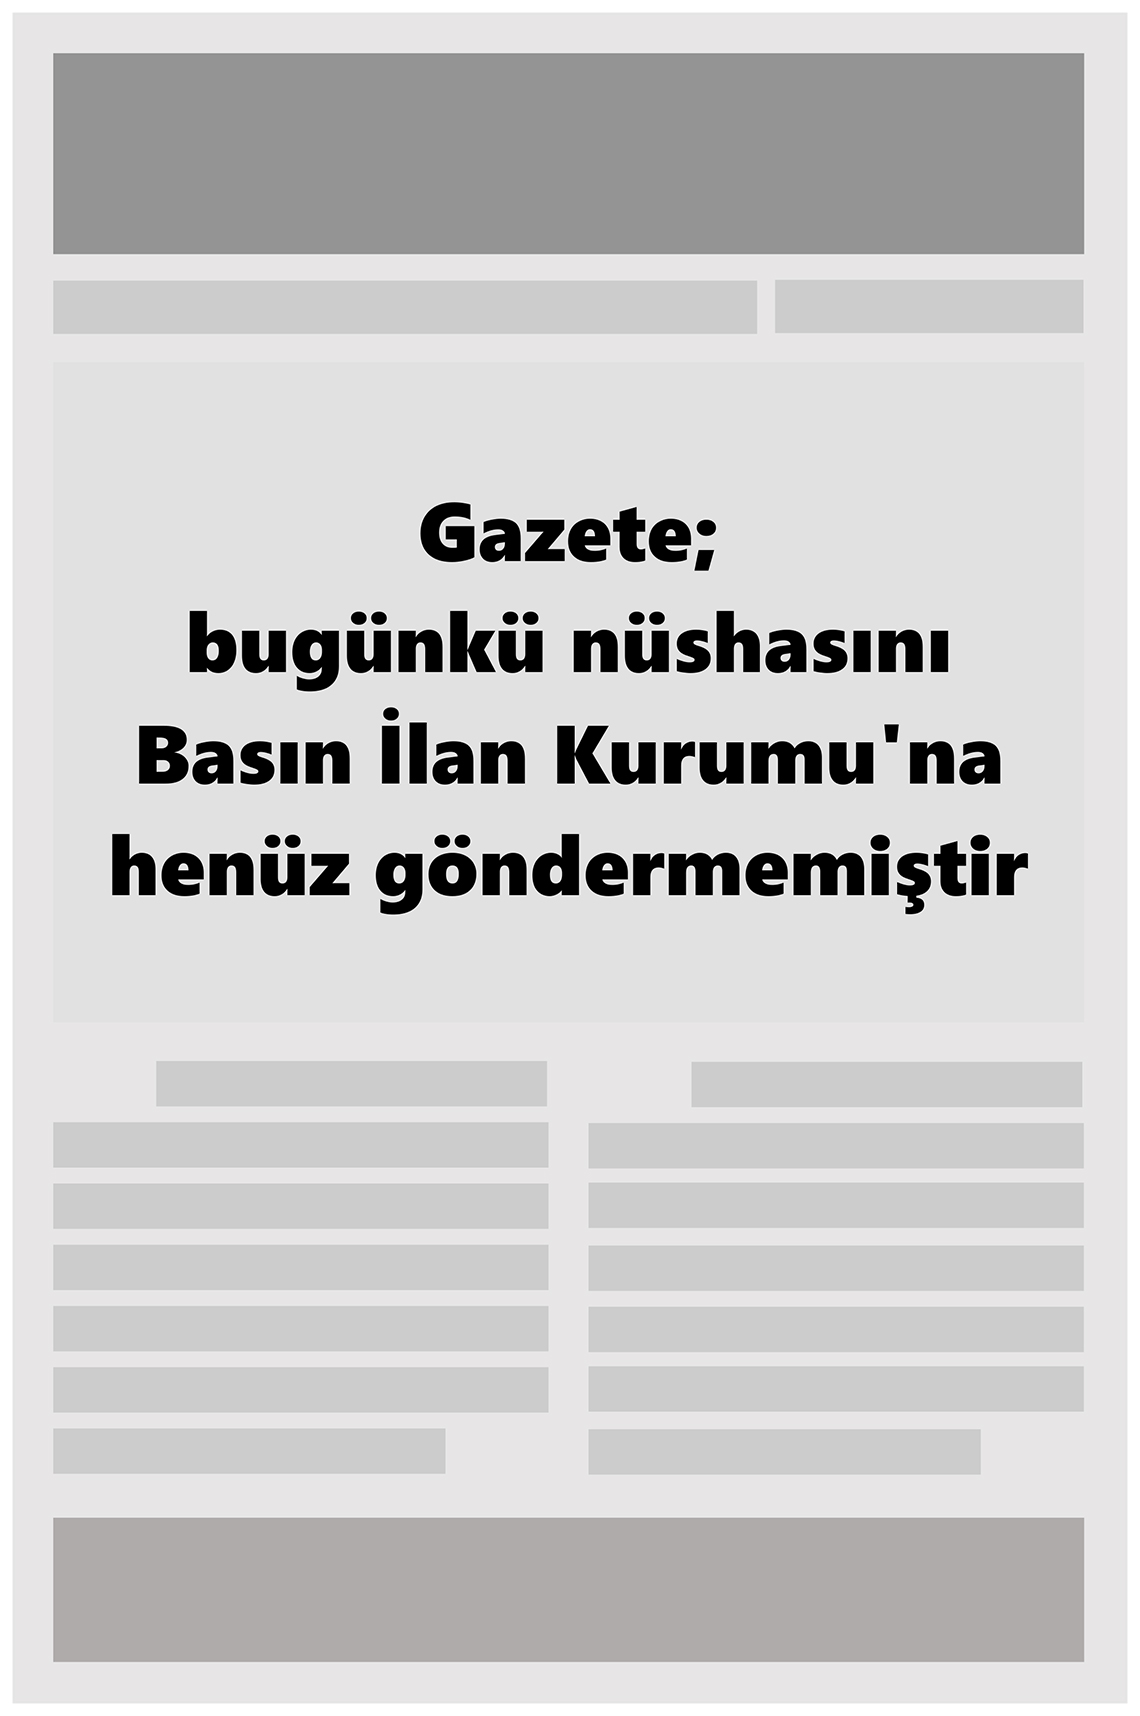 15 Ocak 2022 Gündem 24 Gazete Manşeti